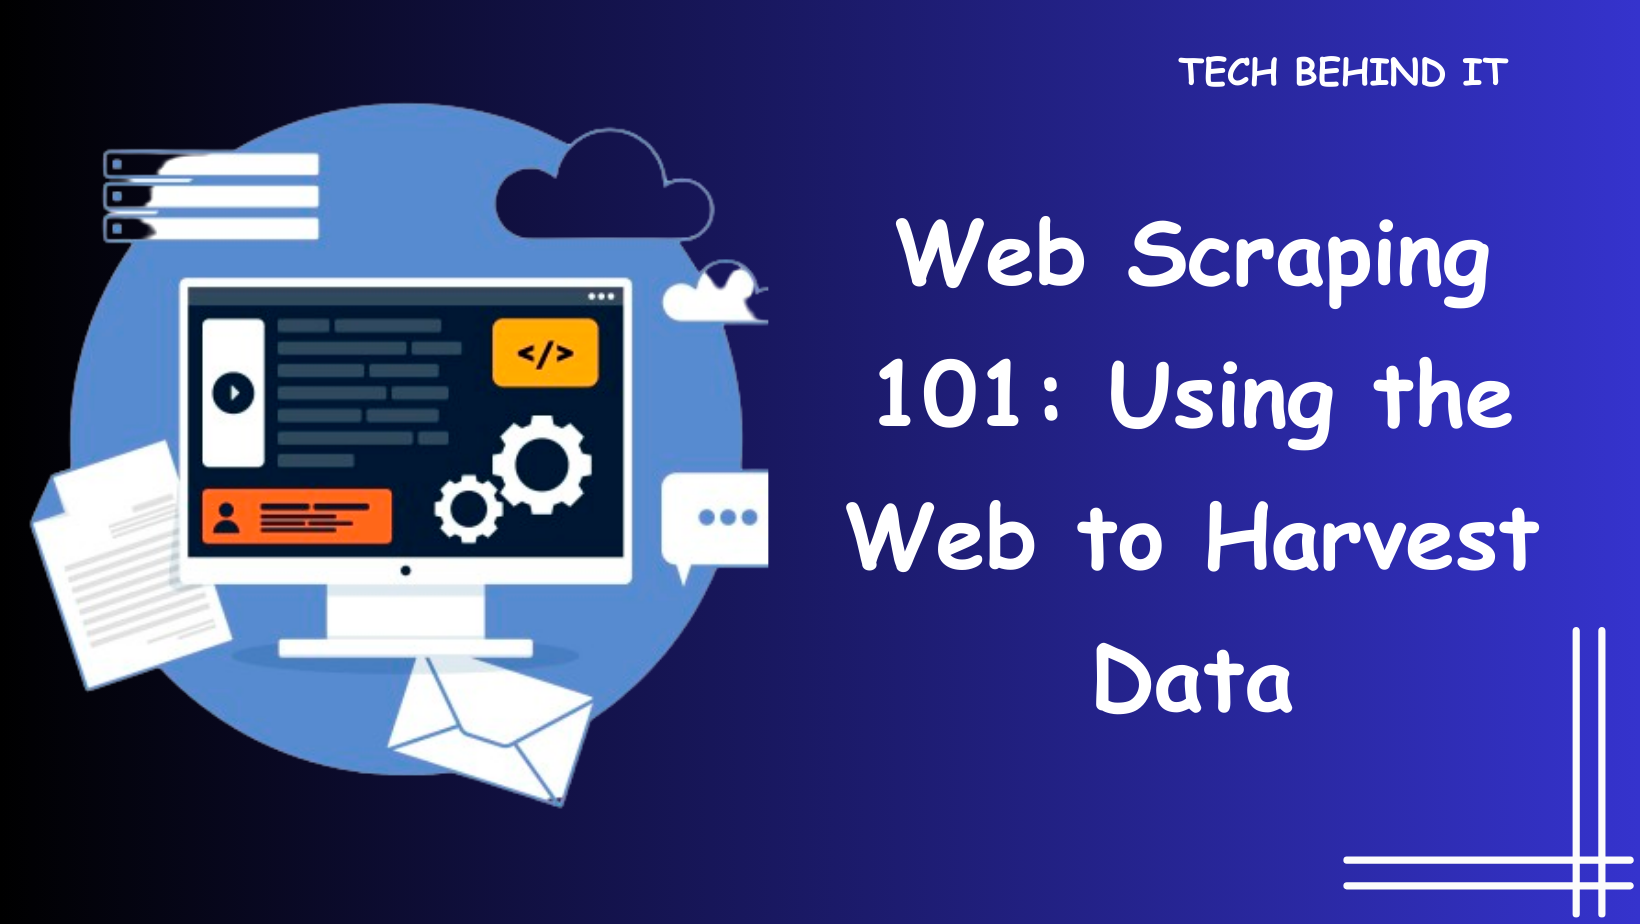 Web Scraping 101: Top 4 Web Scraping Tools